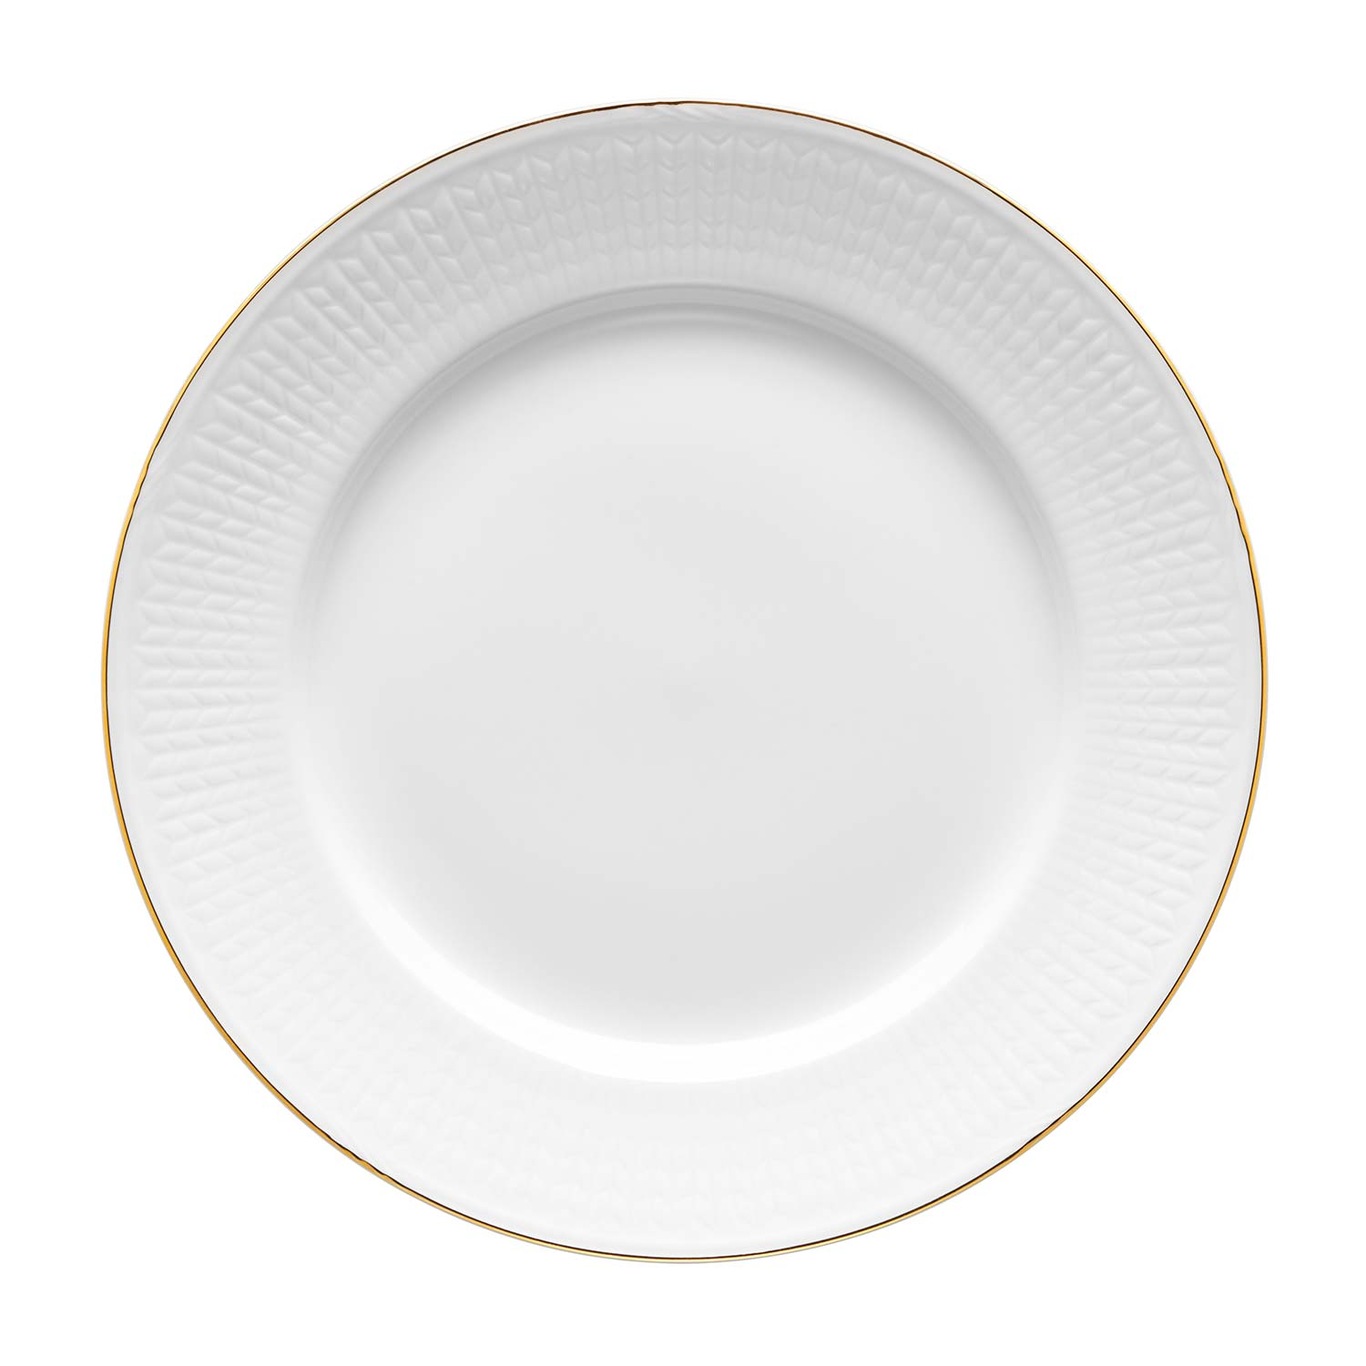 Swedish Grace Gala Plate, 21 cm